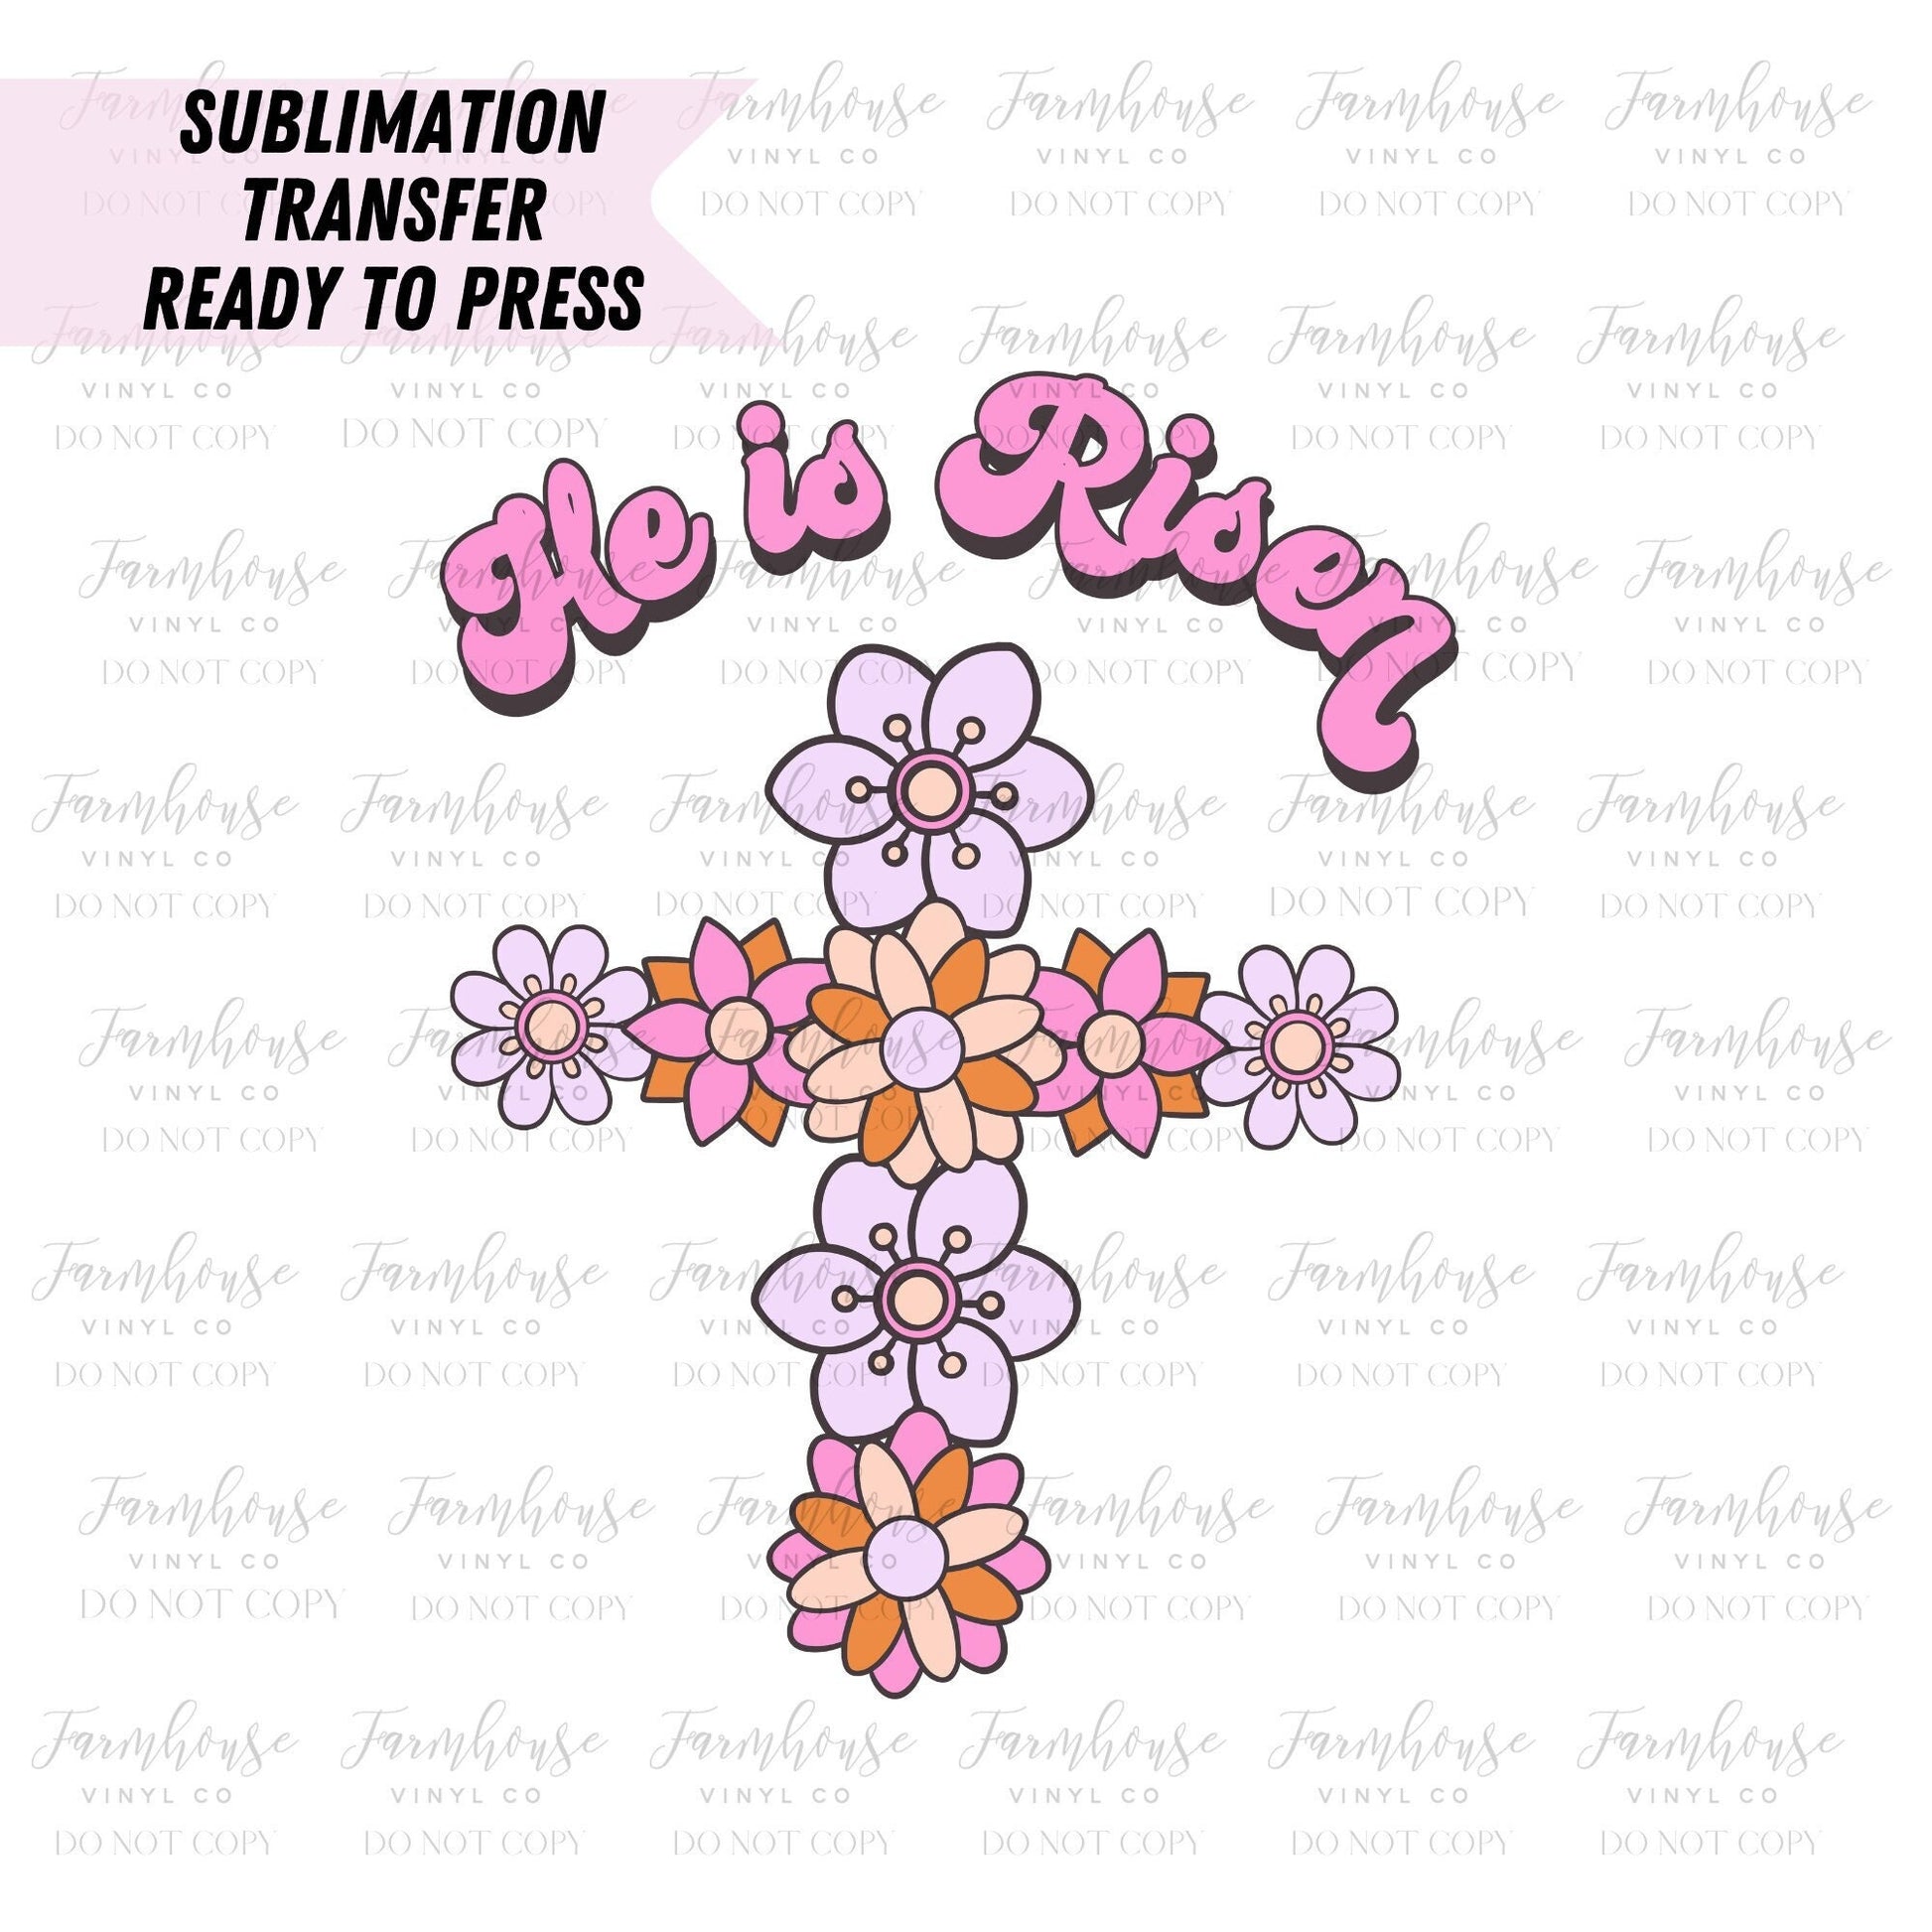 Retro He is Risen Floral Cross Ready to Press Sublimation Transfer - Farmhouse Vinyl Co